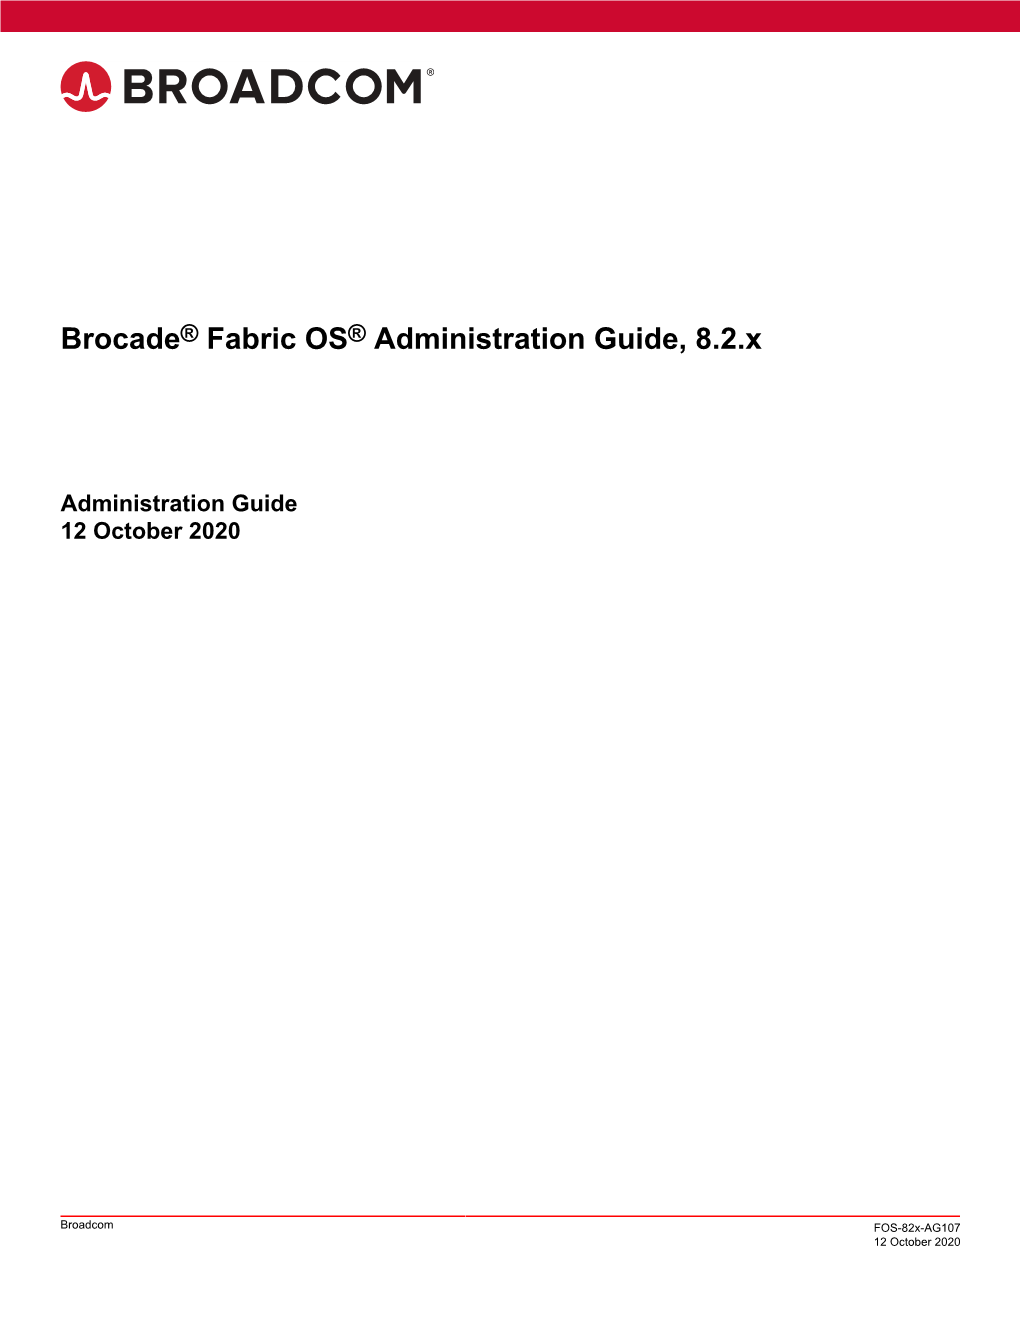 Brocade Fabric OS Administration Guide, 8.2.X